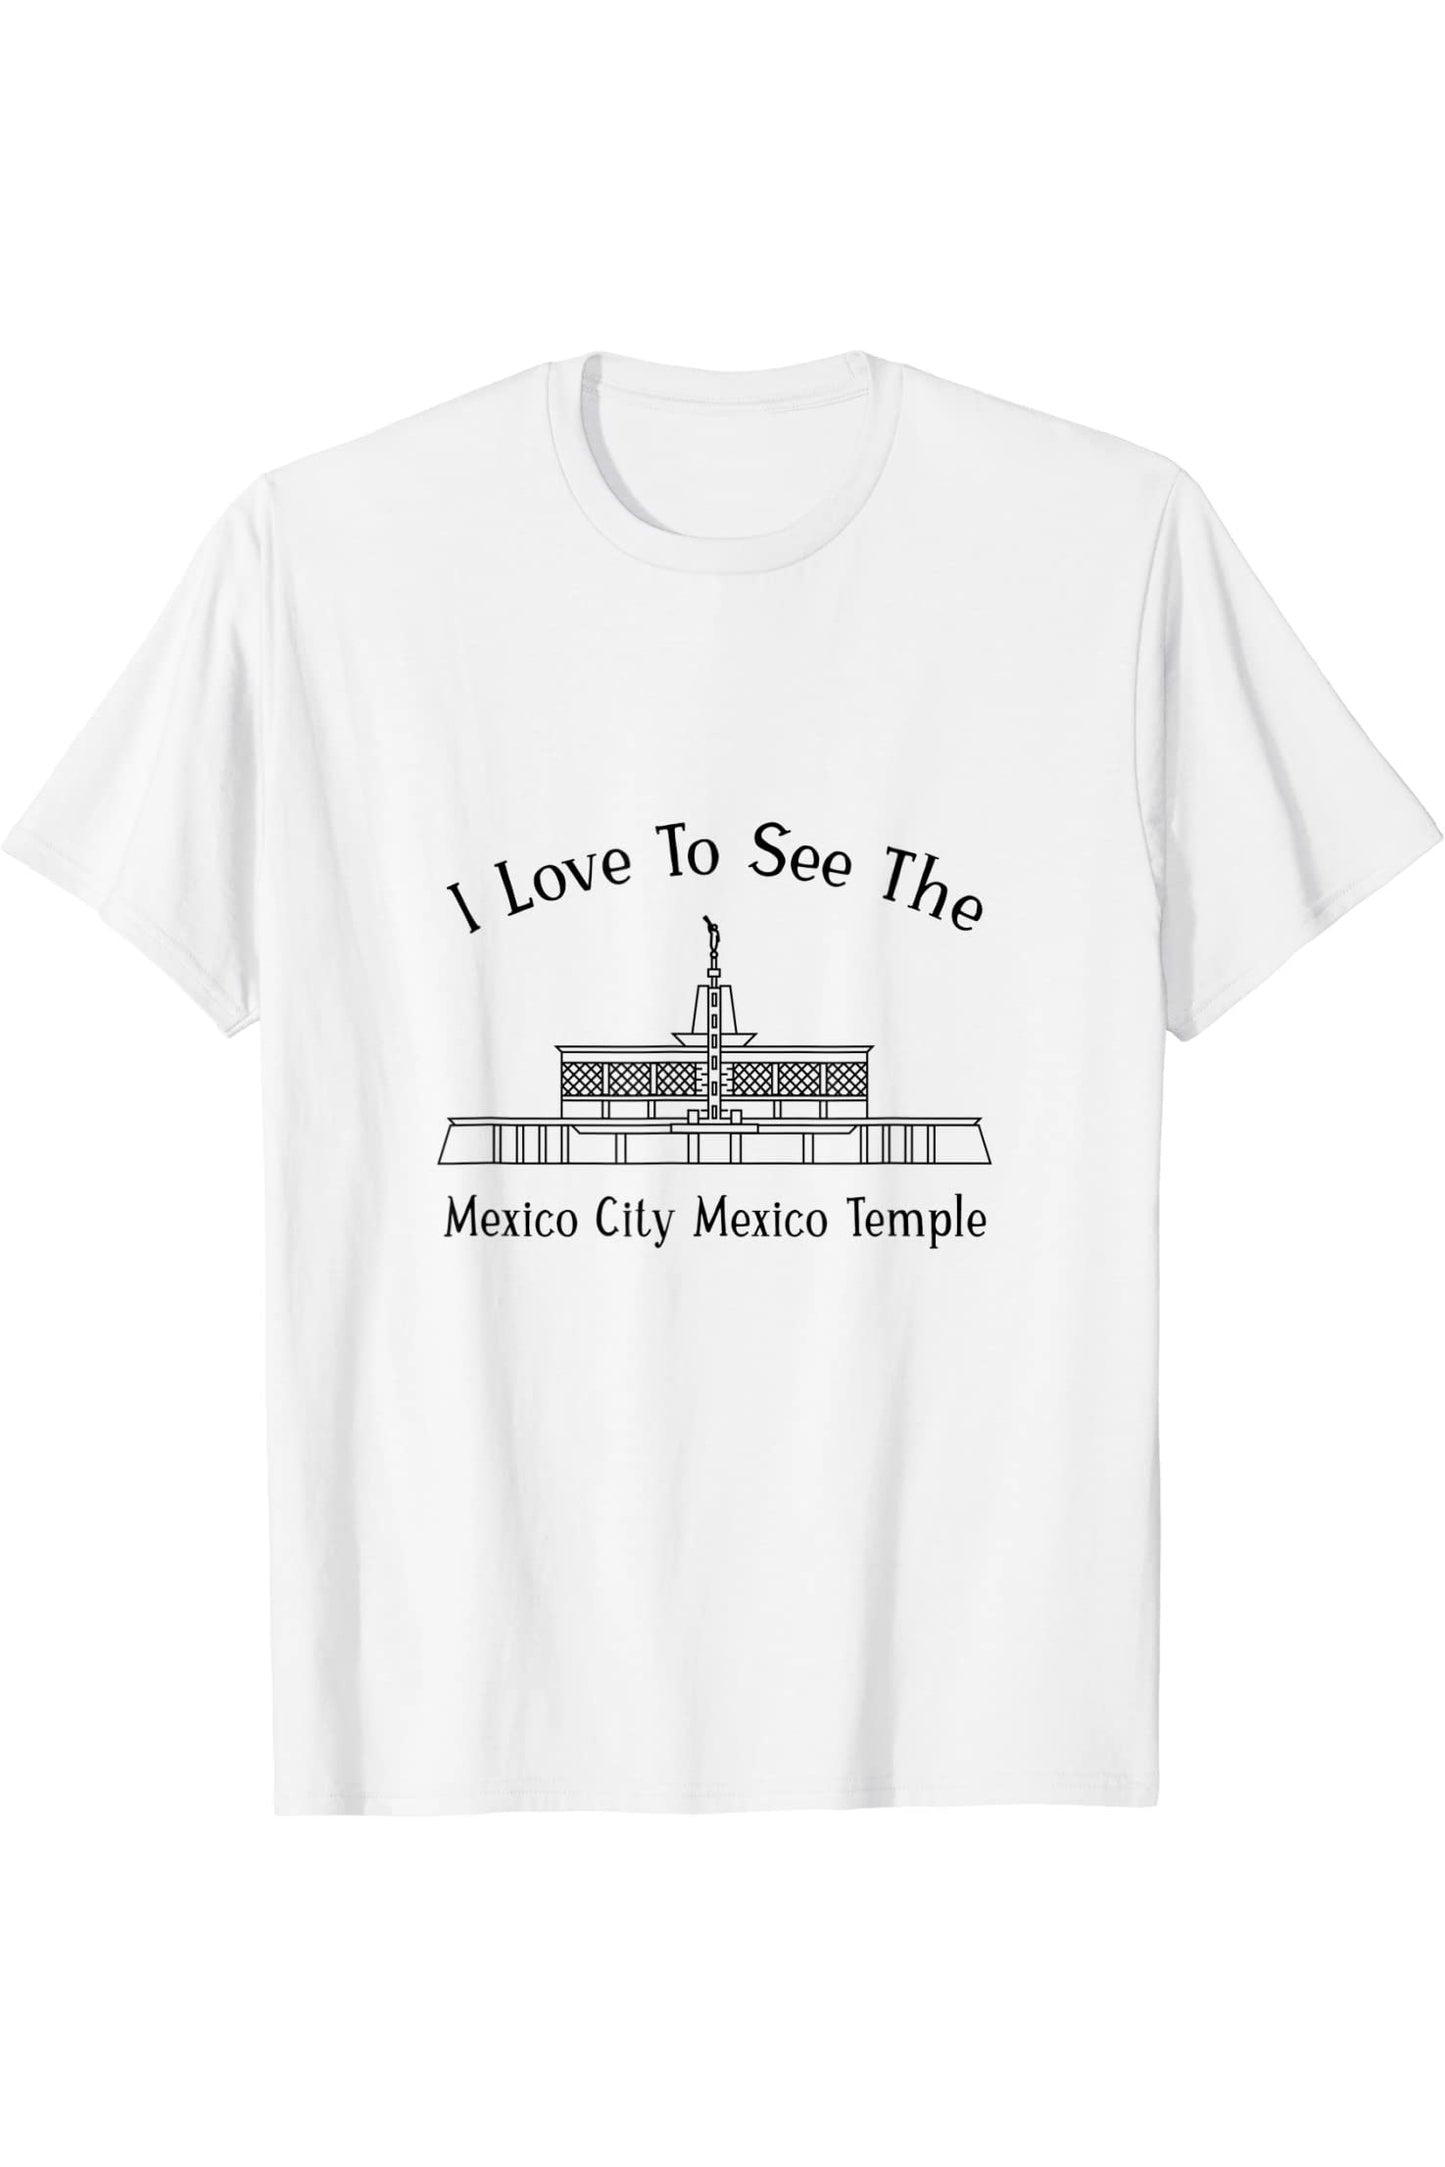 Mexico City Mexico Temple T-Shirt - Happy Style (English) US